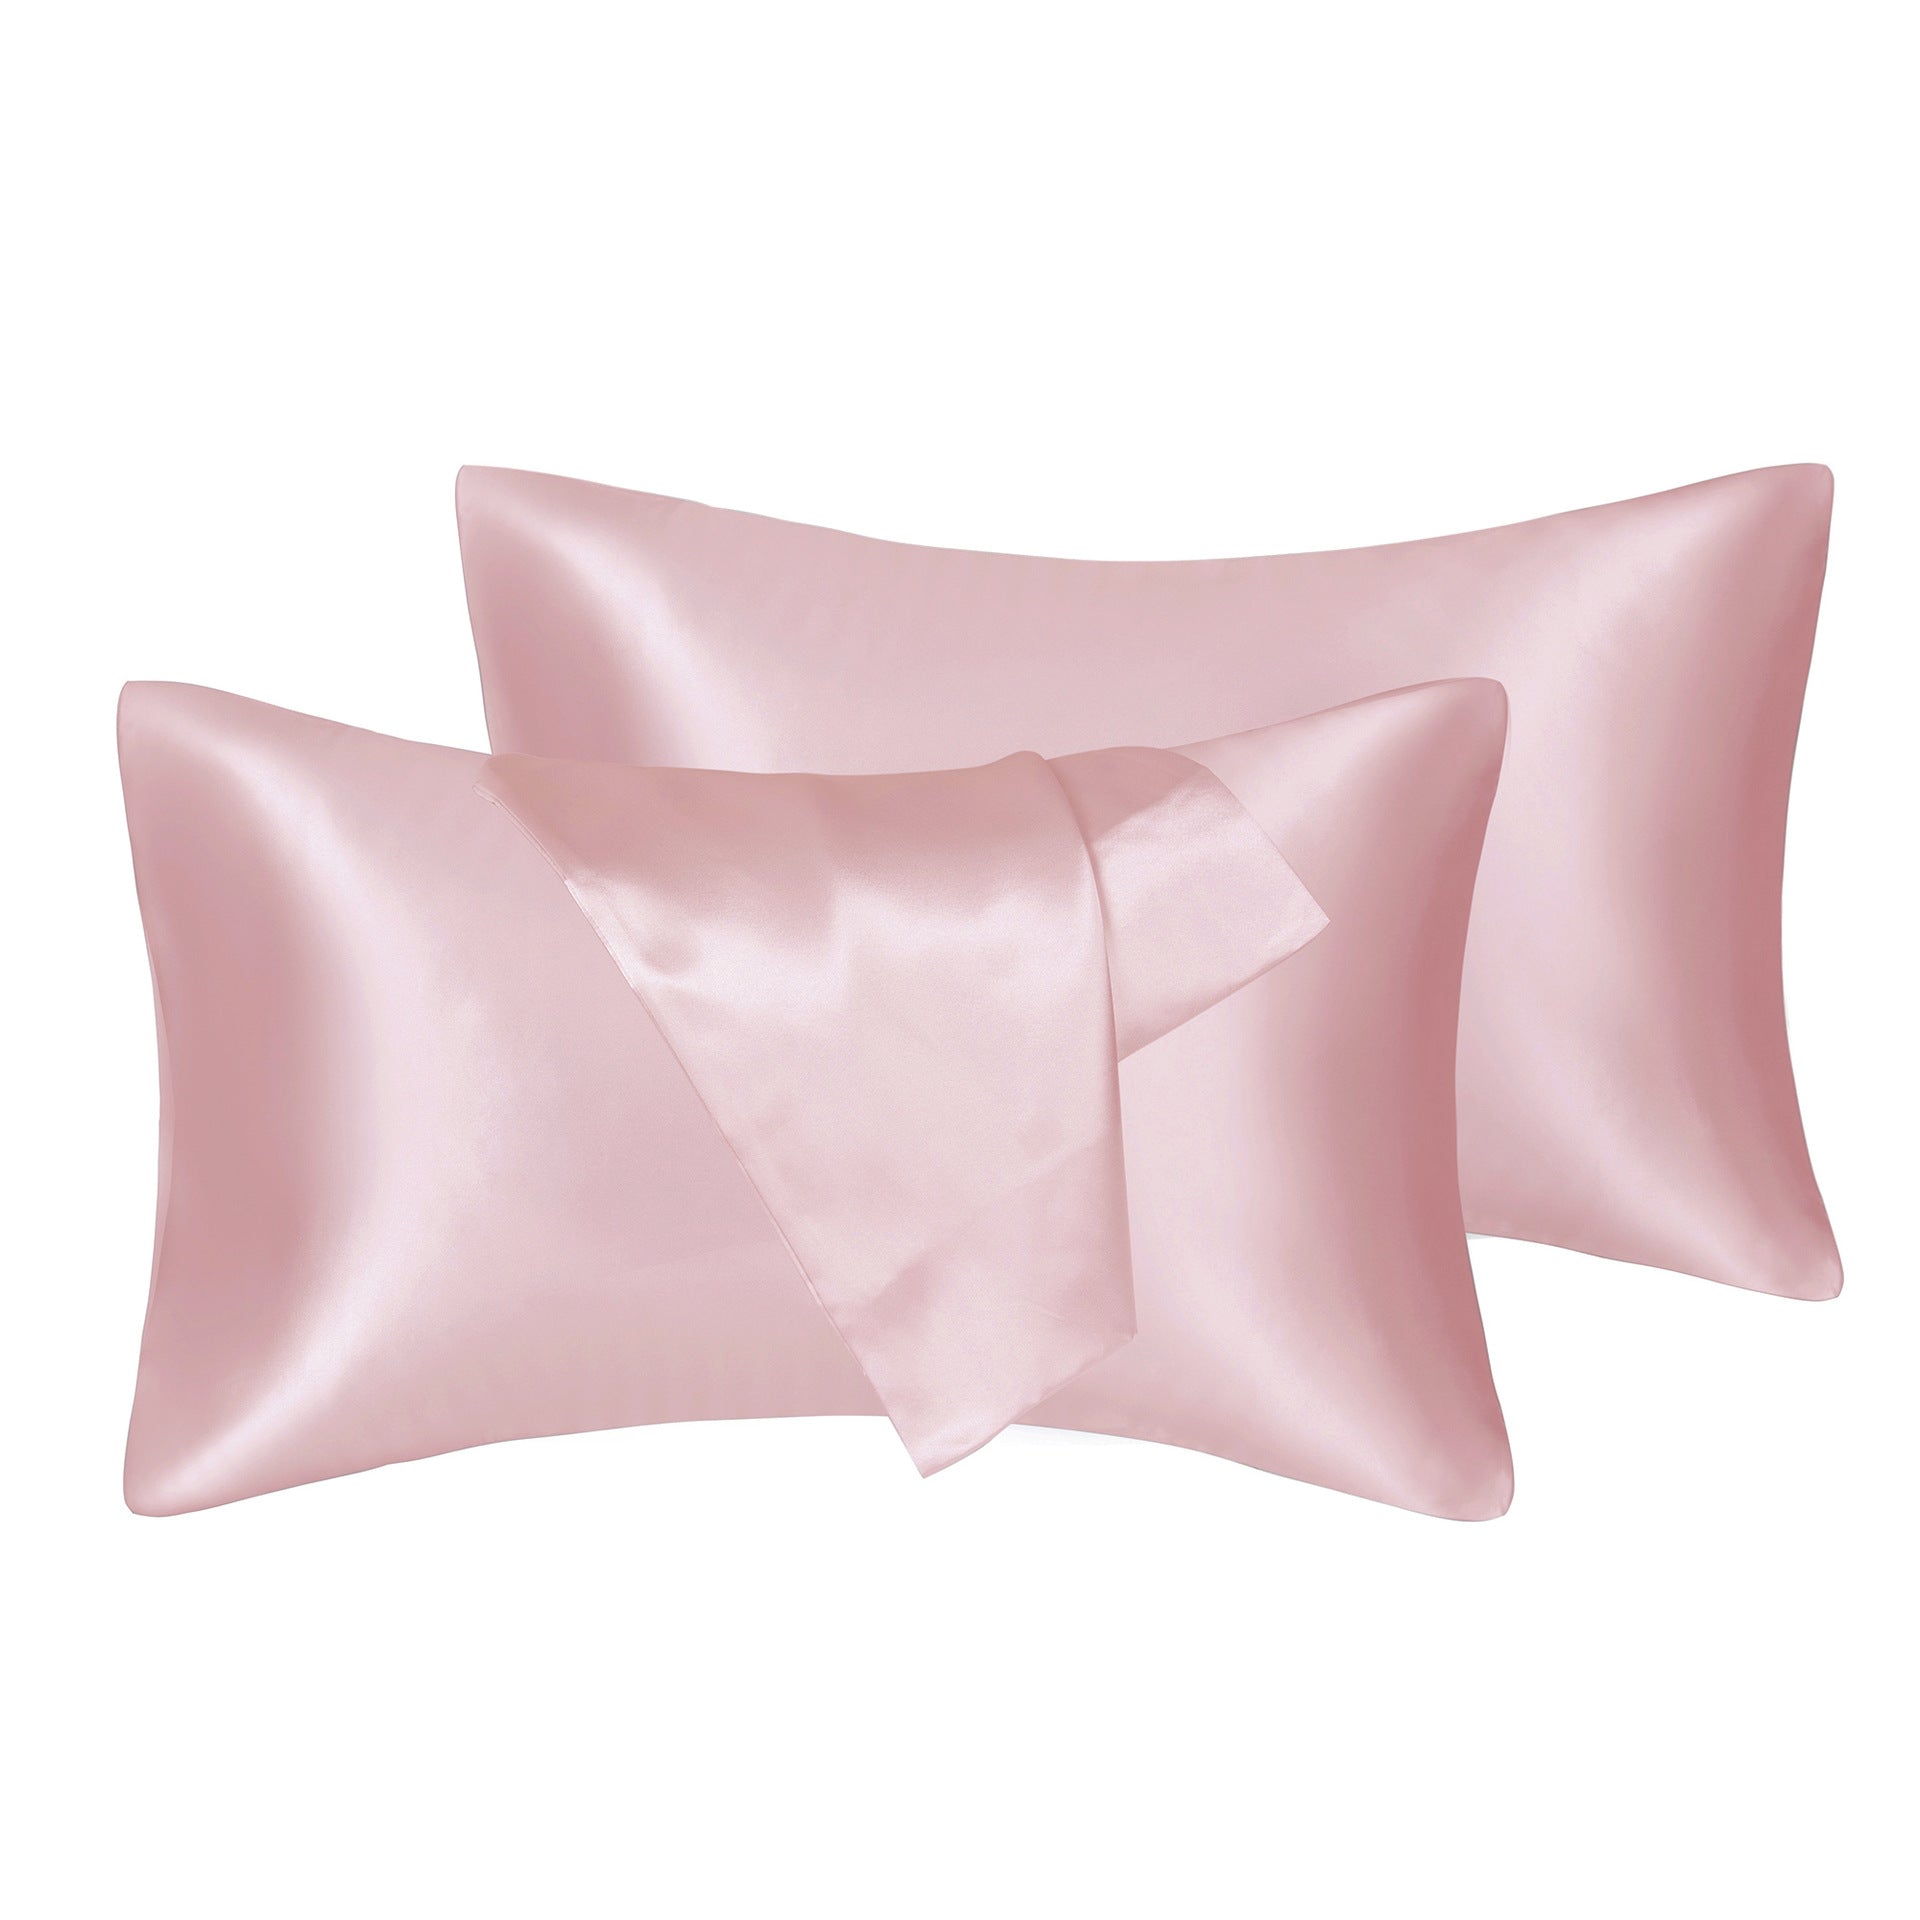 Importikaah-Silk-Pillowcase-single-pack-Elegant-designed-combine-luxury-skincare-haircare-benefits